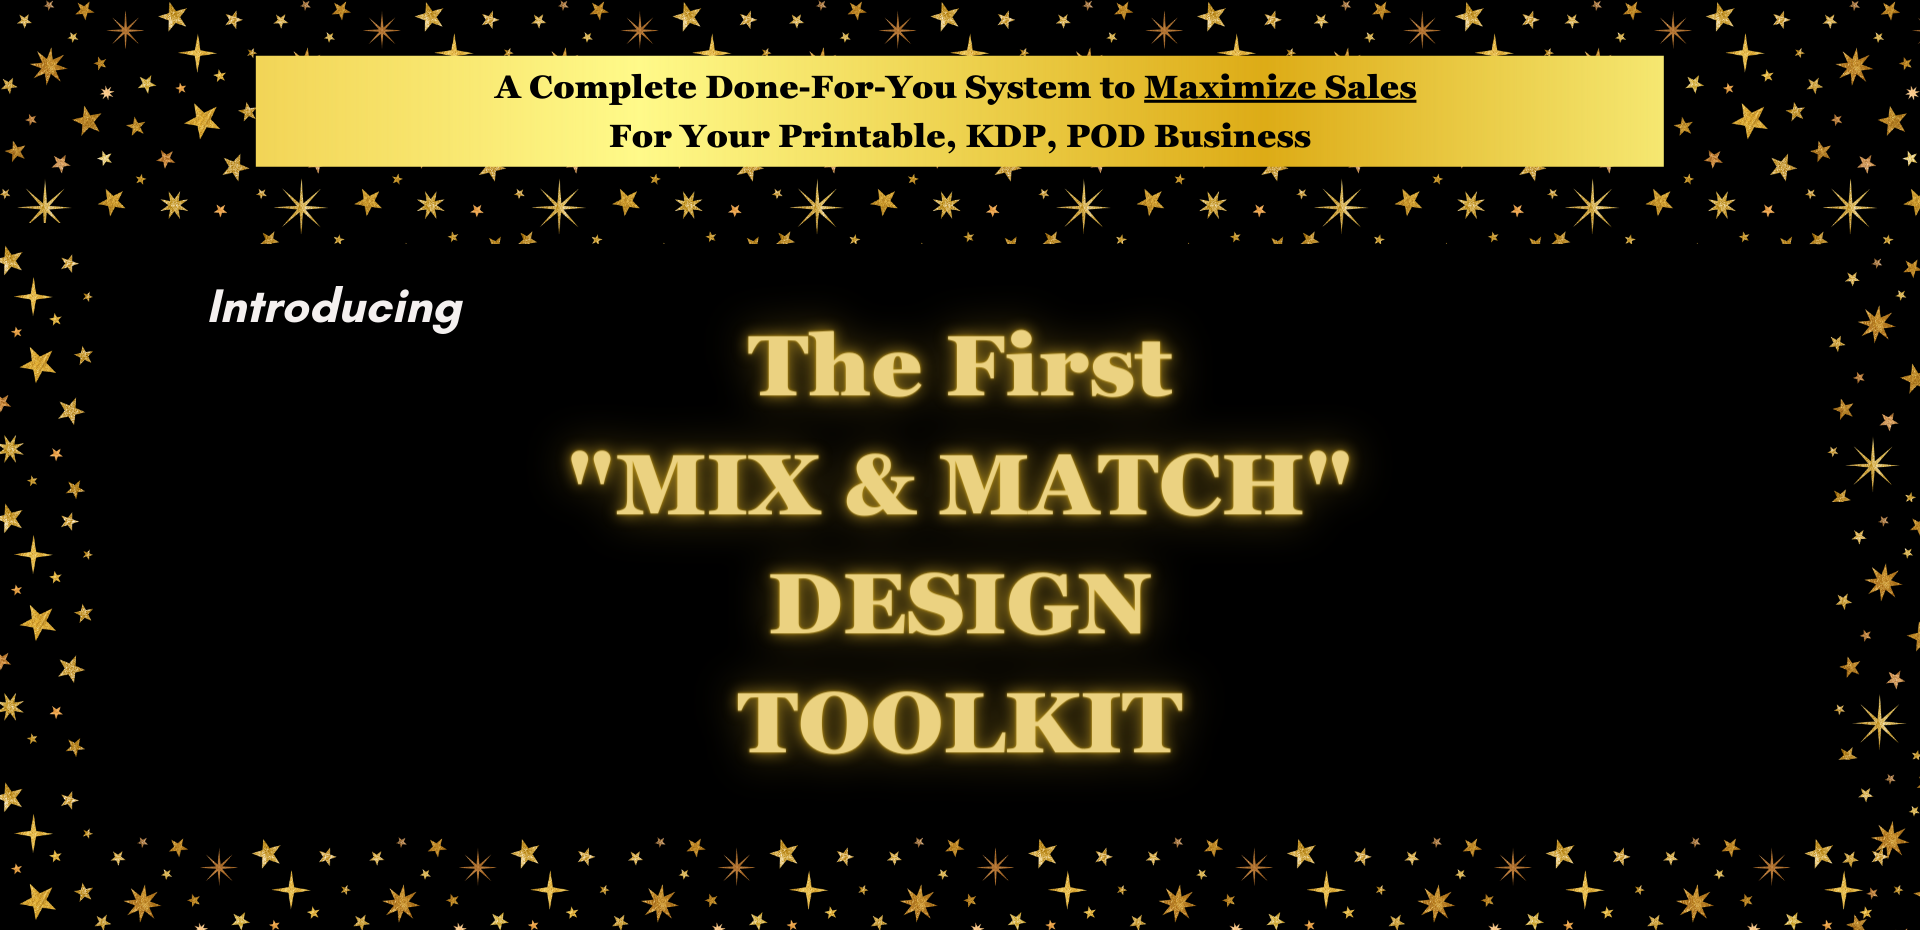 Mix & match Design Toolkit for Printables, KDP, POD - PLR